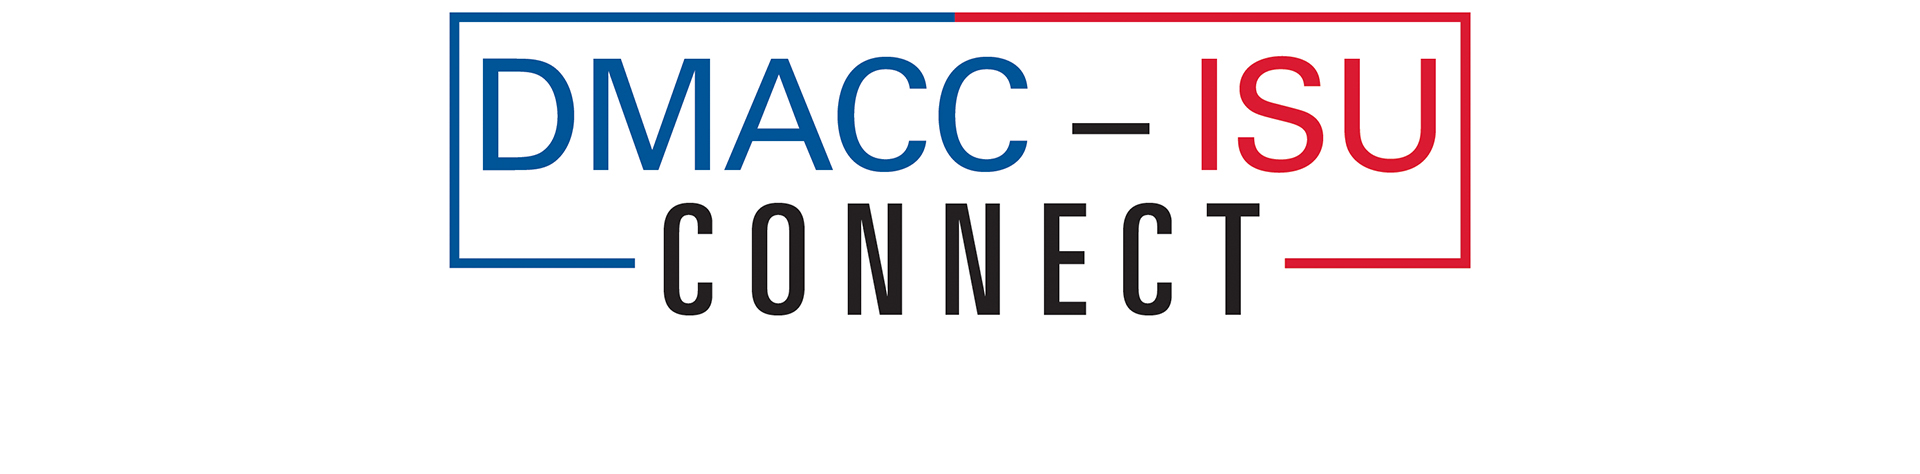 DMACC - ISU Connect